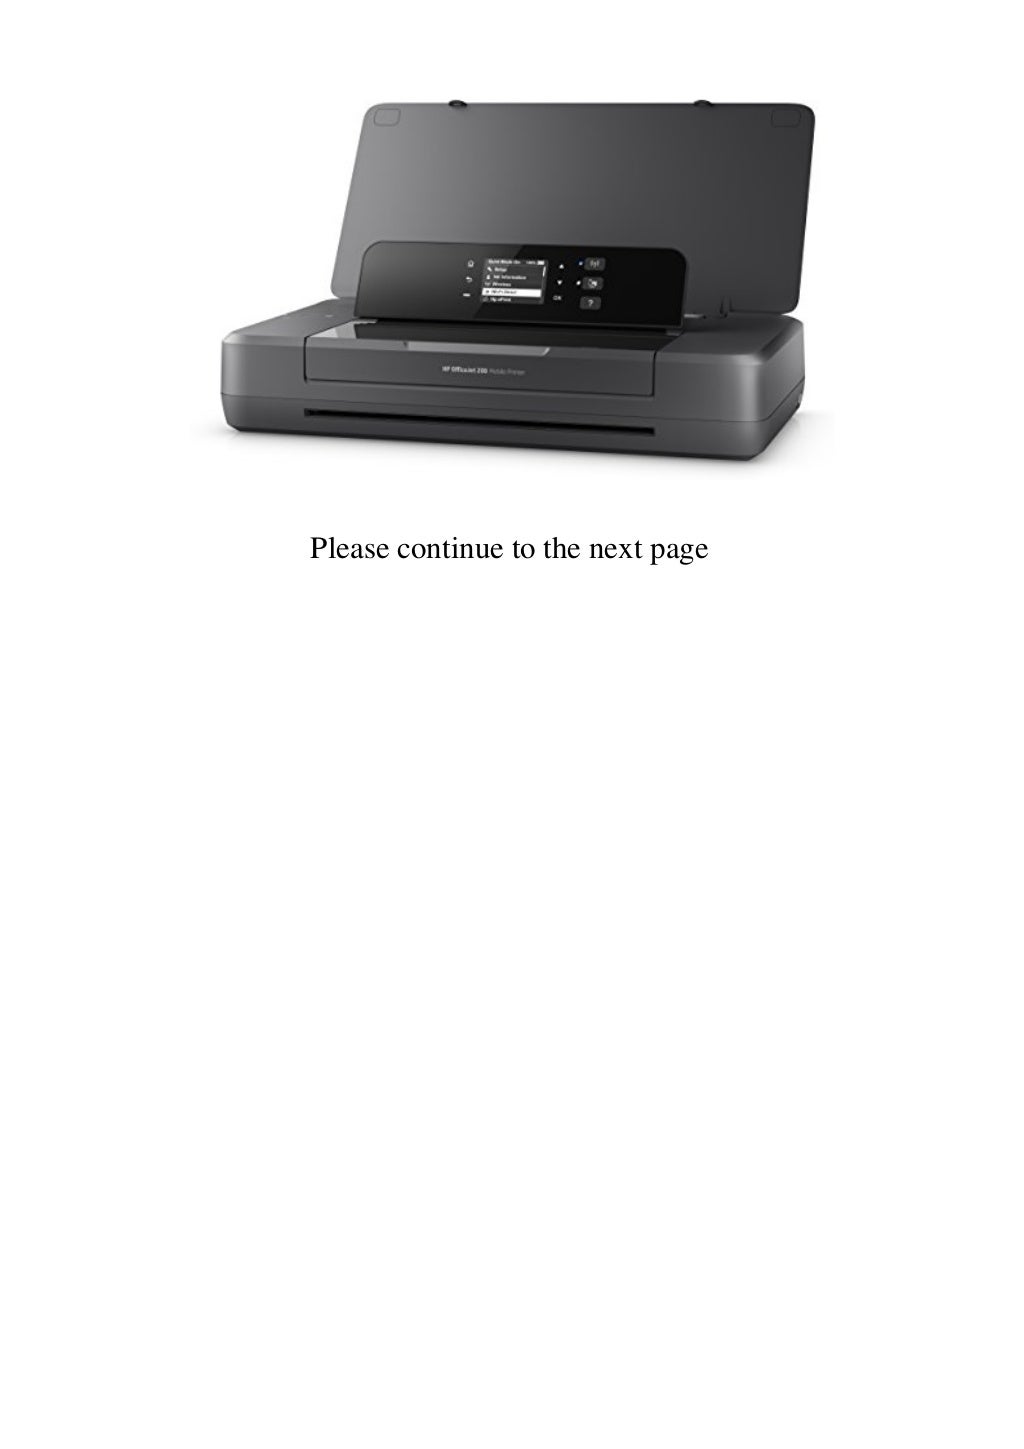 buy-online-hp-officejet-200-mobile-printer-discount